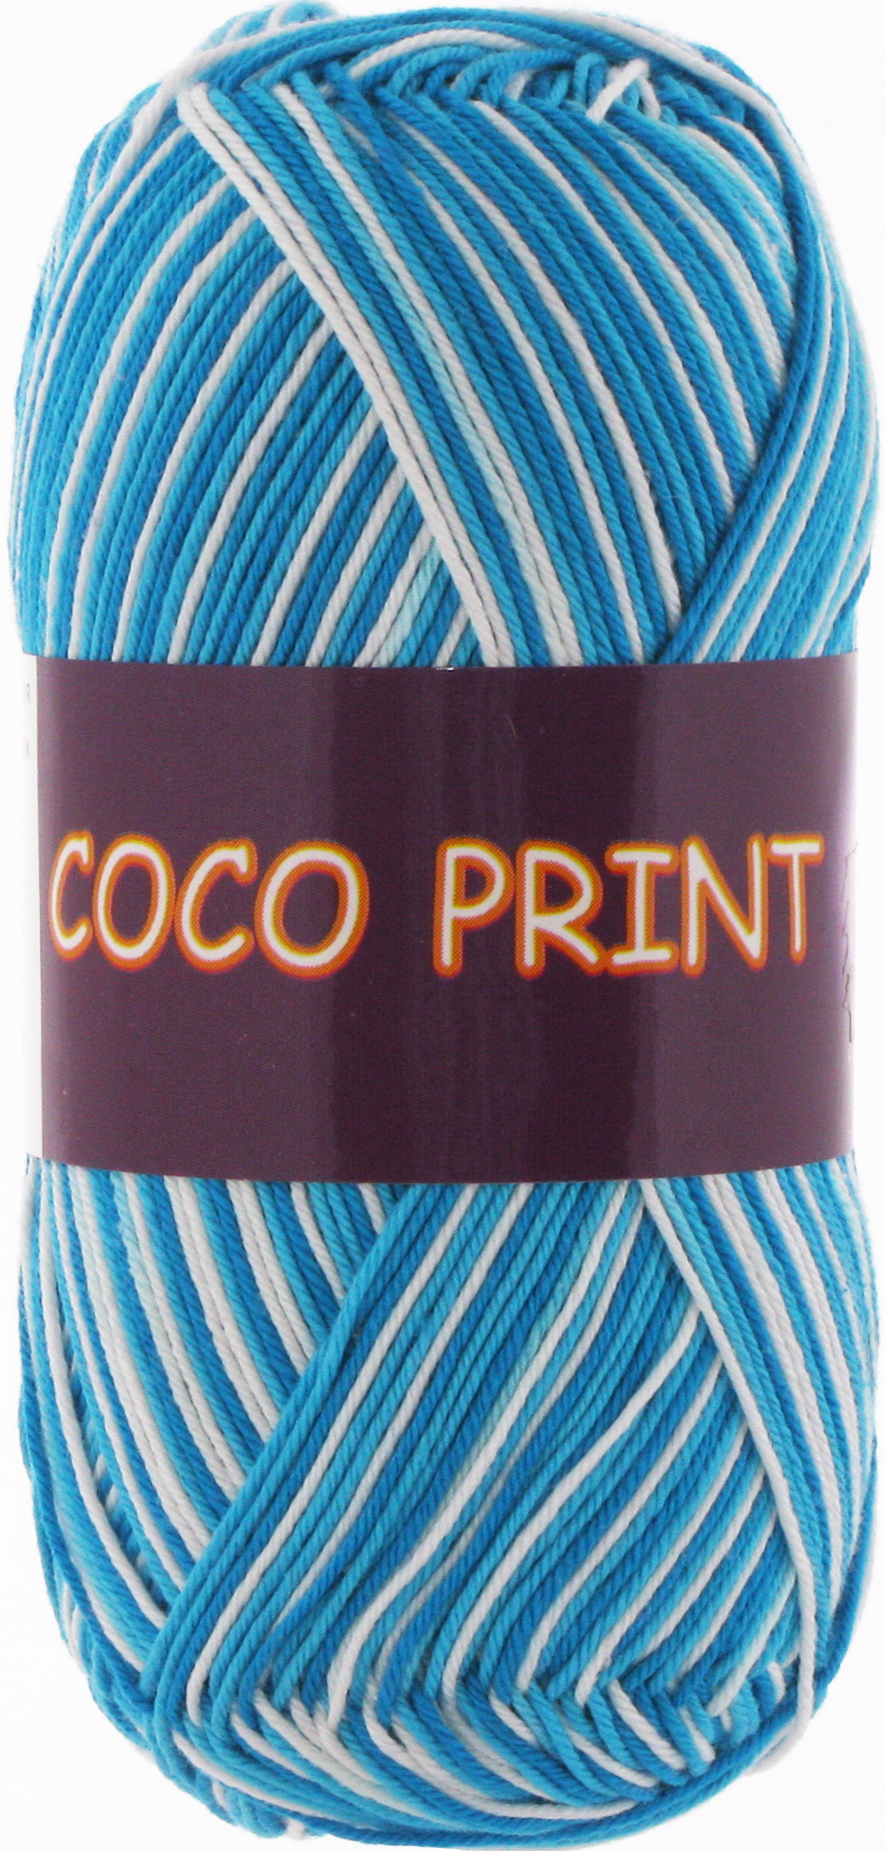 Coco print 4668 голубой мел